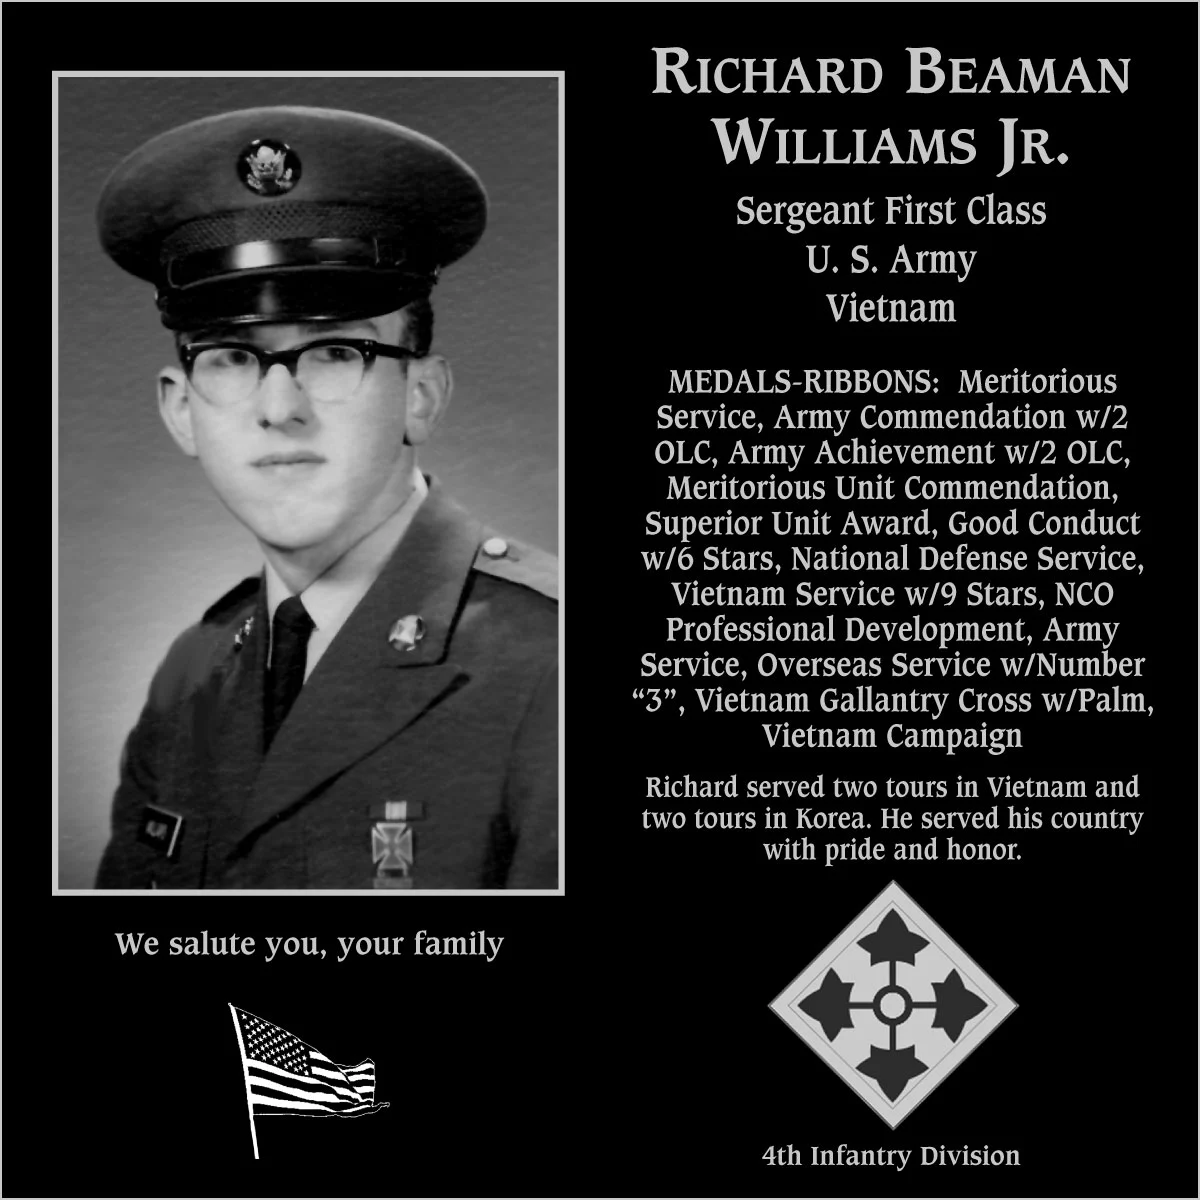 Richard Beaman Williams jr